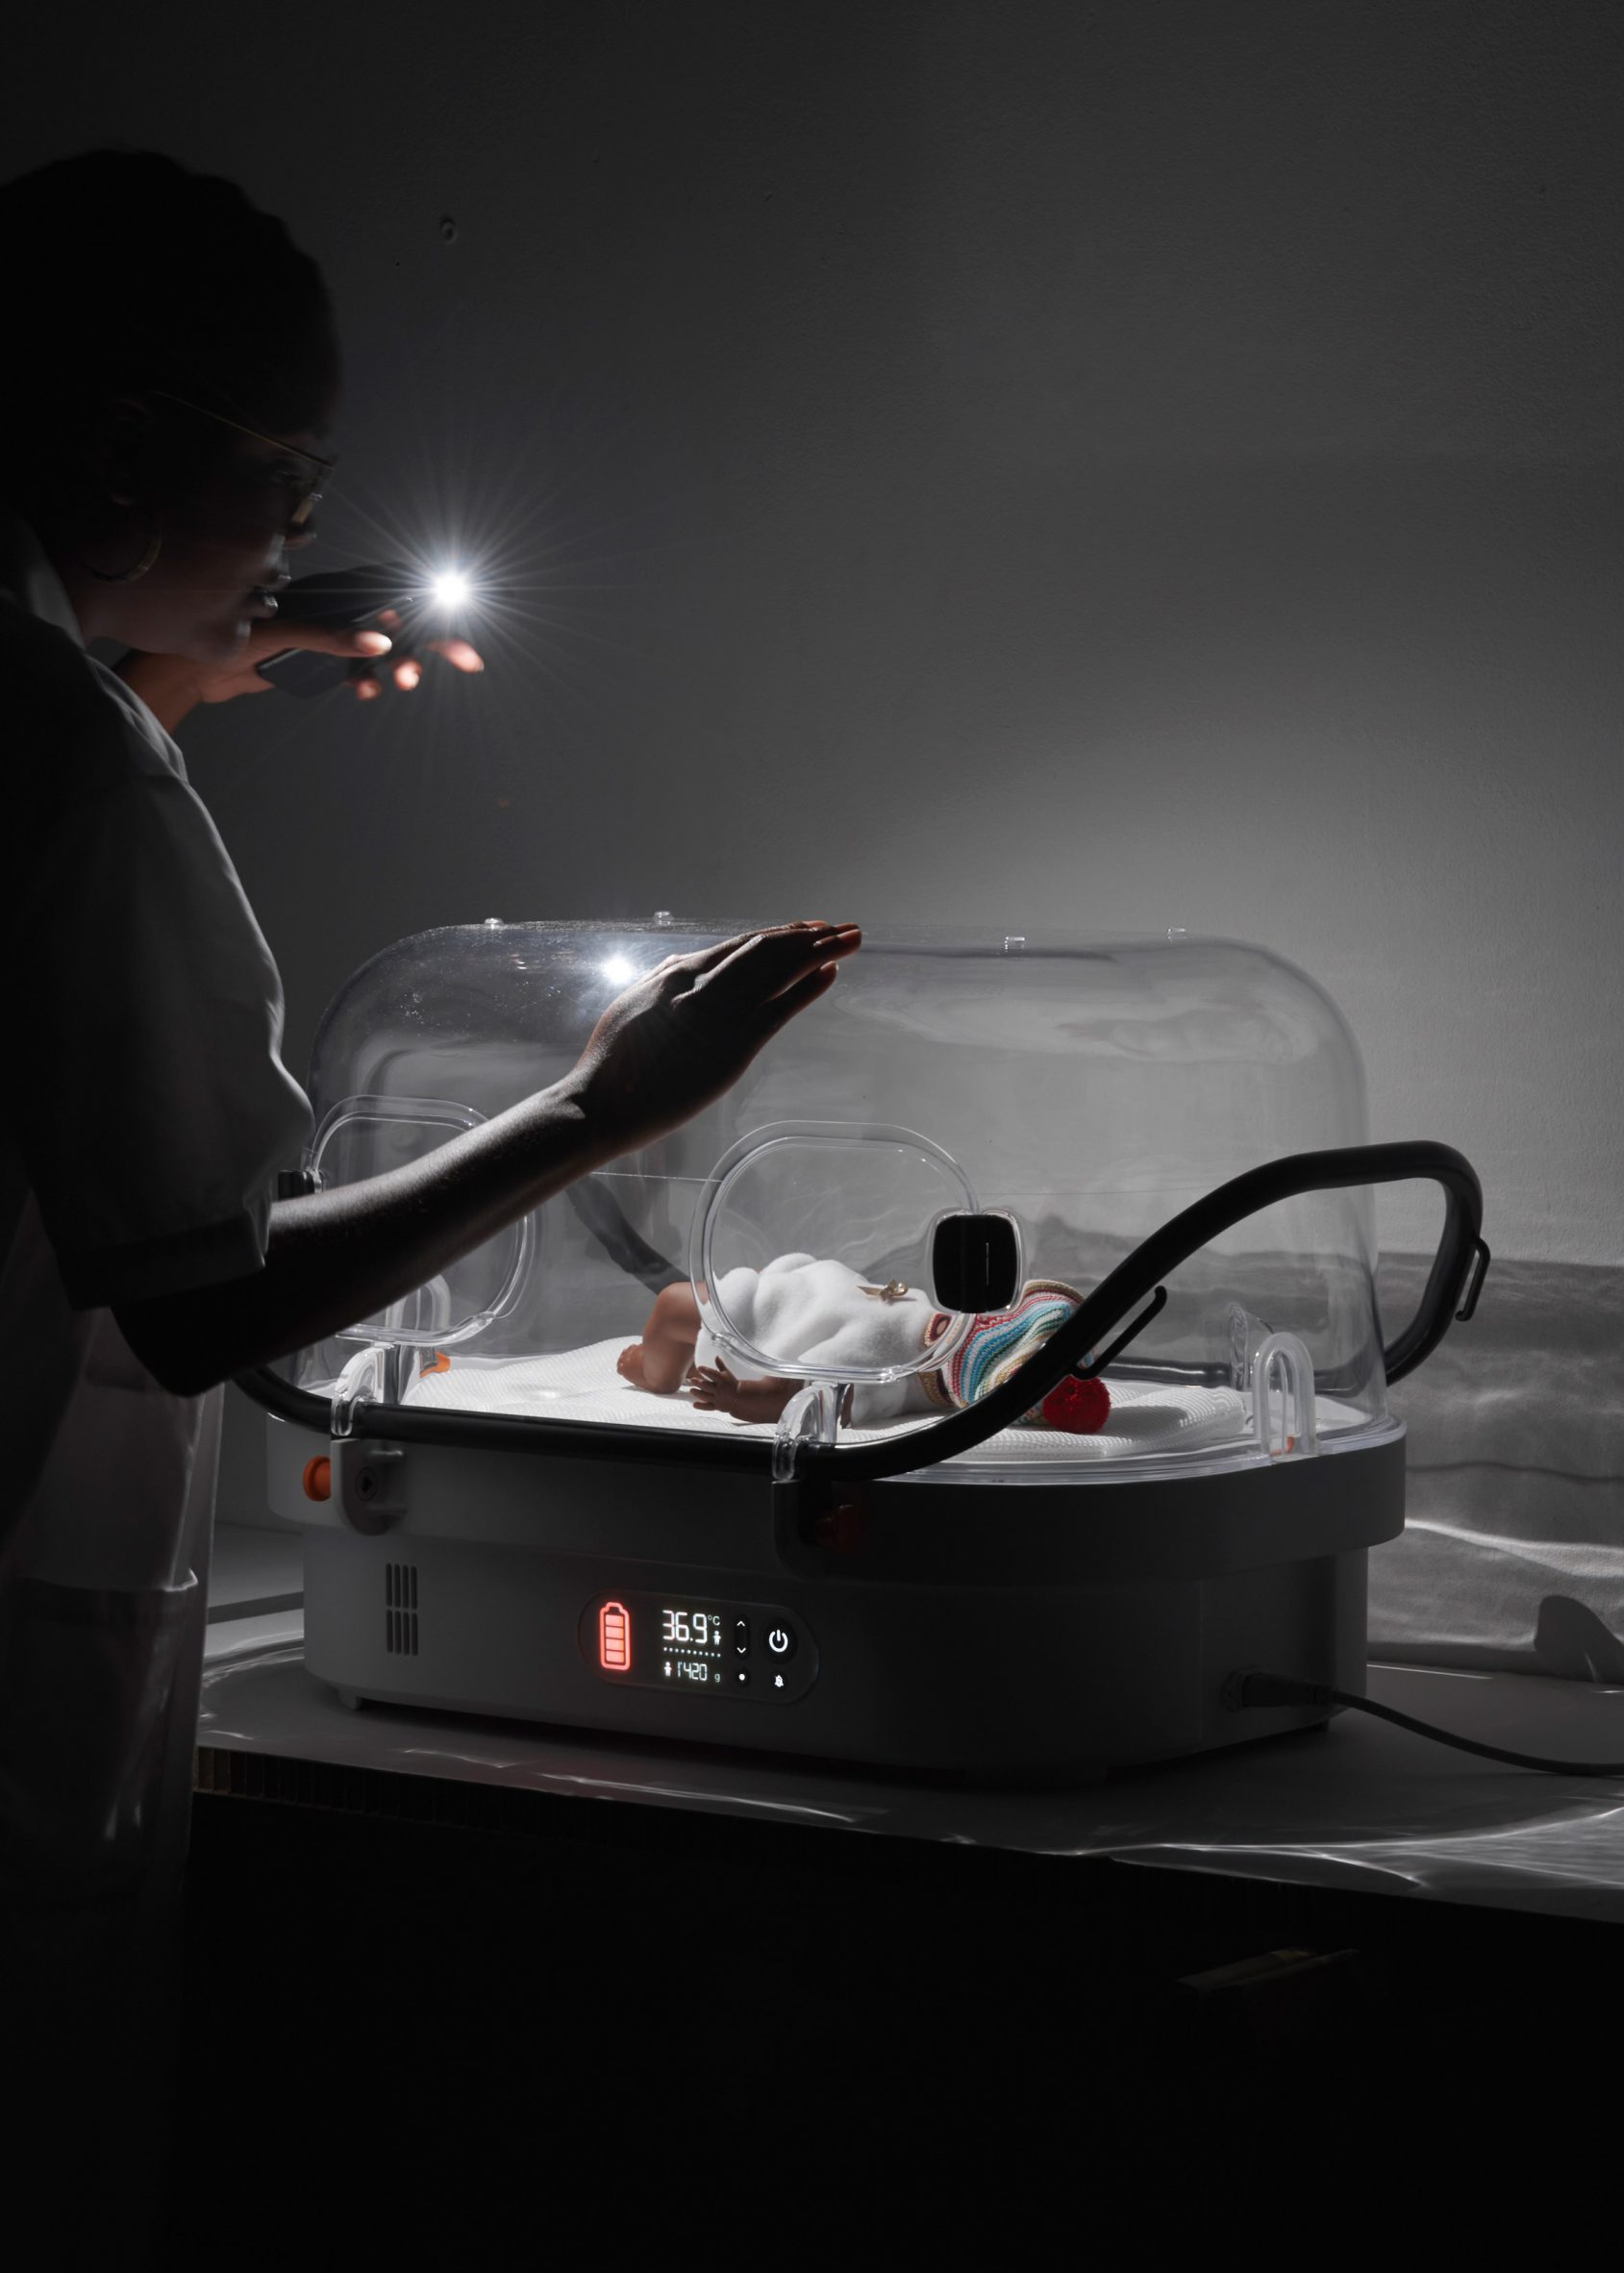 A baby sleeping inside the incubator